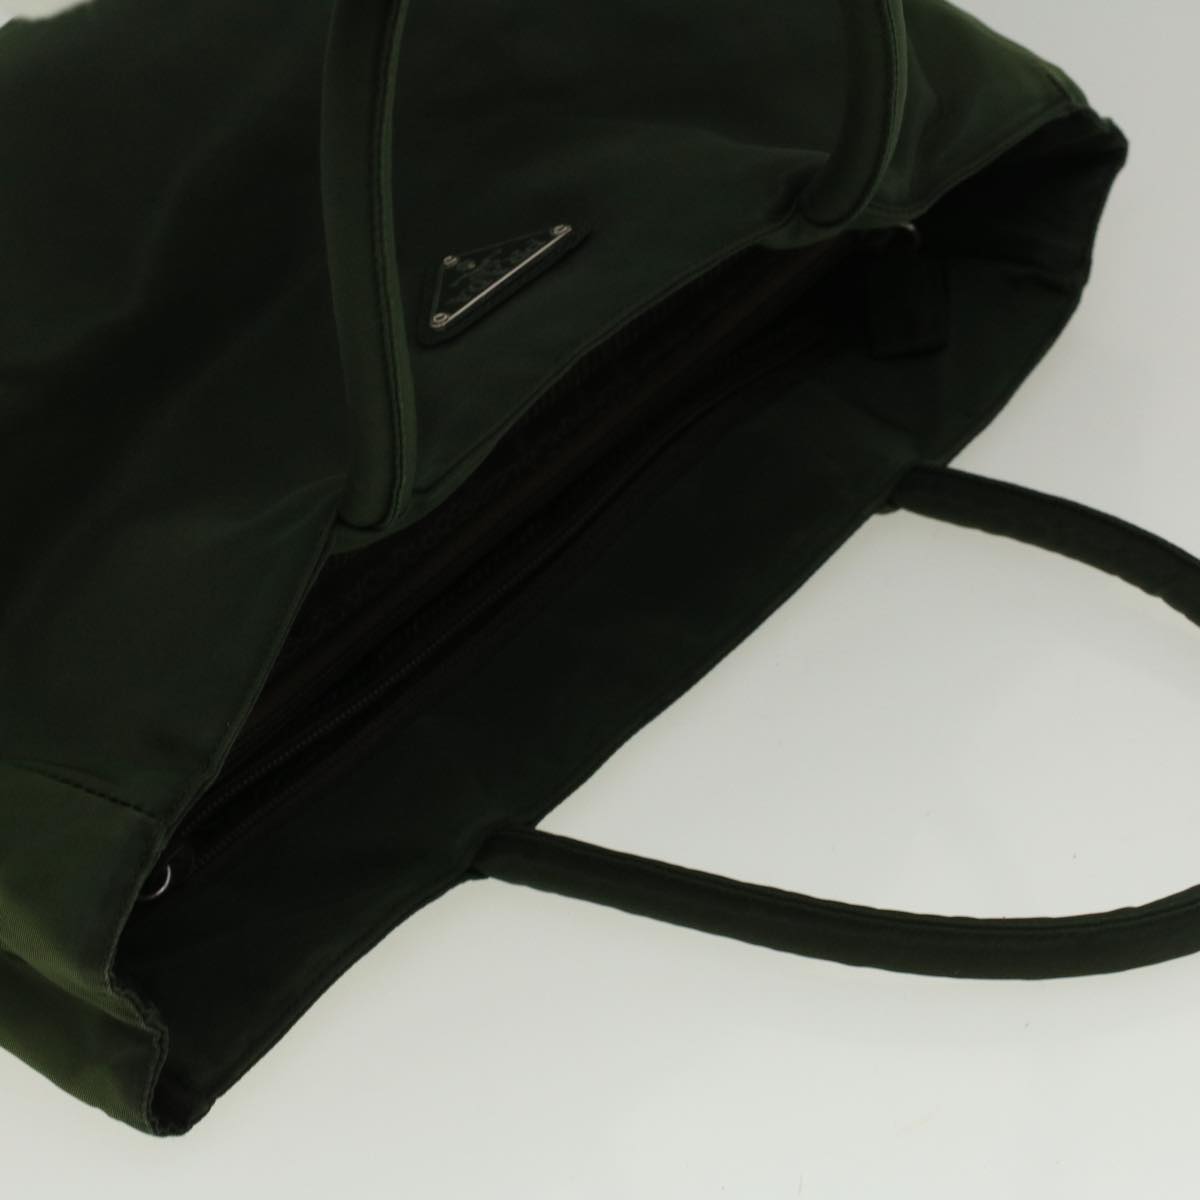 PRADA Hand Bag Nylon Green Auth cl802